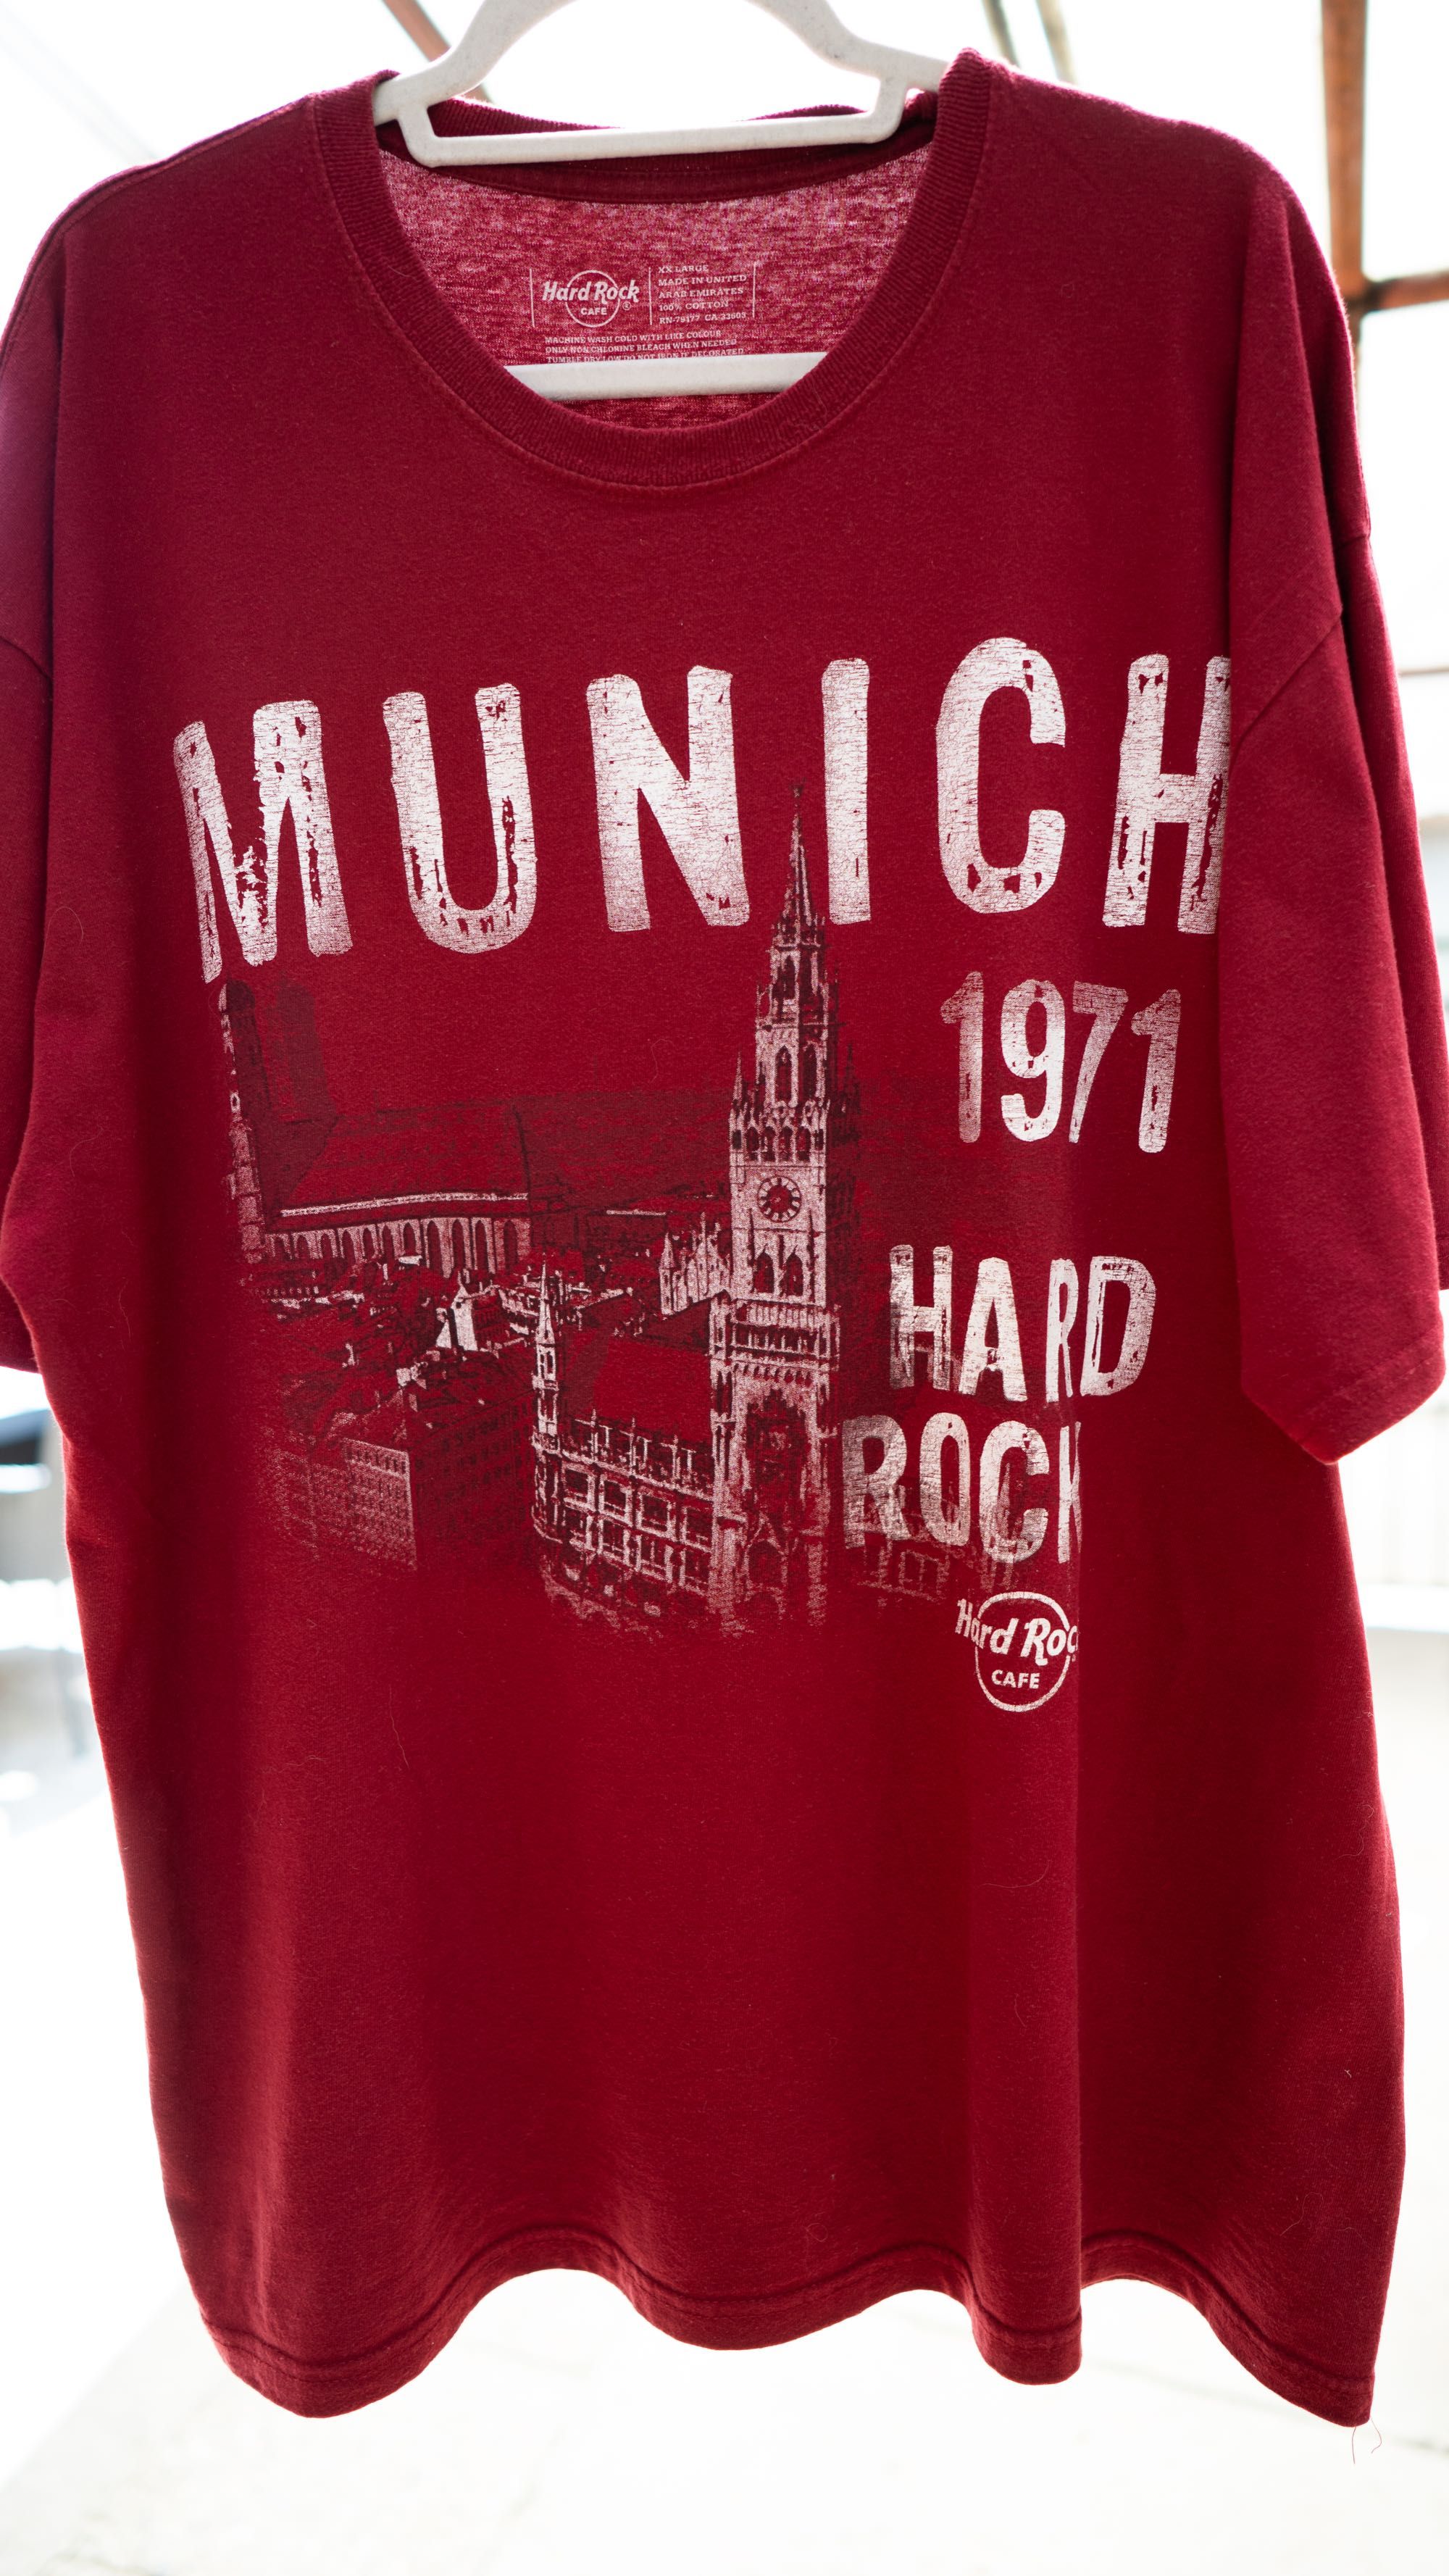 Tricou HardRock Caffe Munich XXL